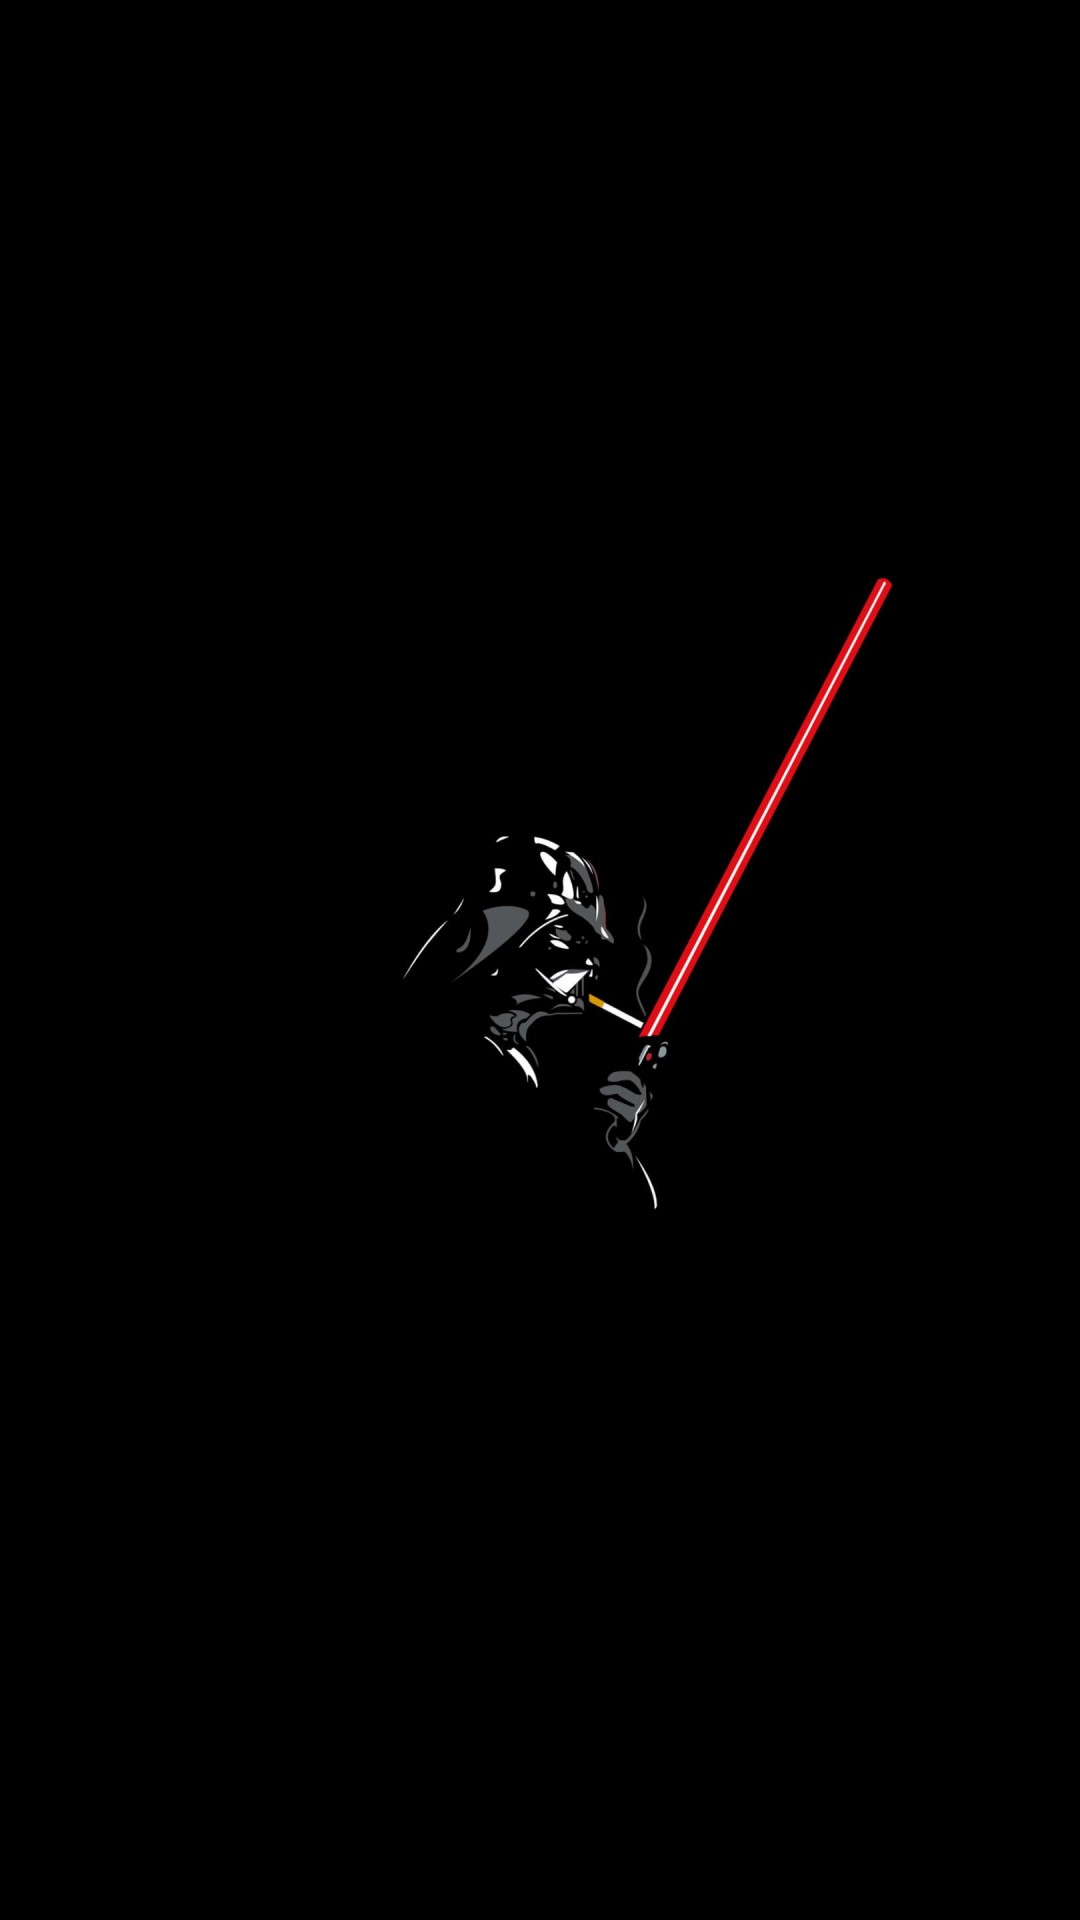 Darth Vader Lighting a Cigarette Wallpaper for HTC One